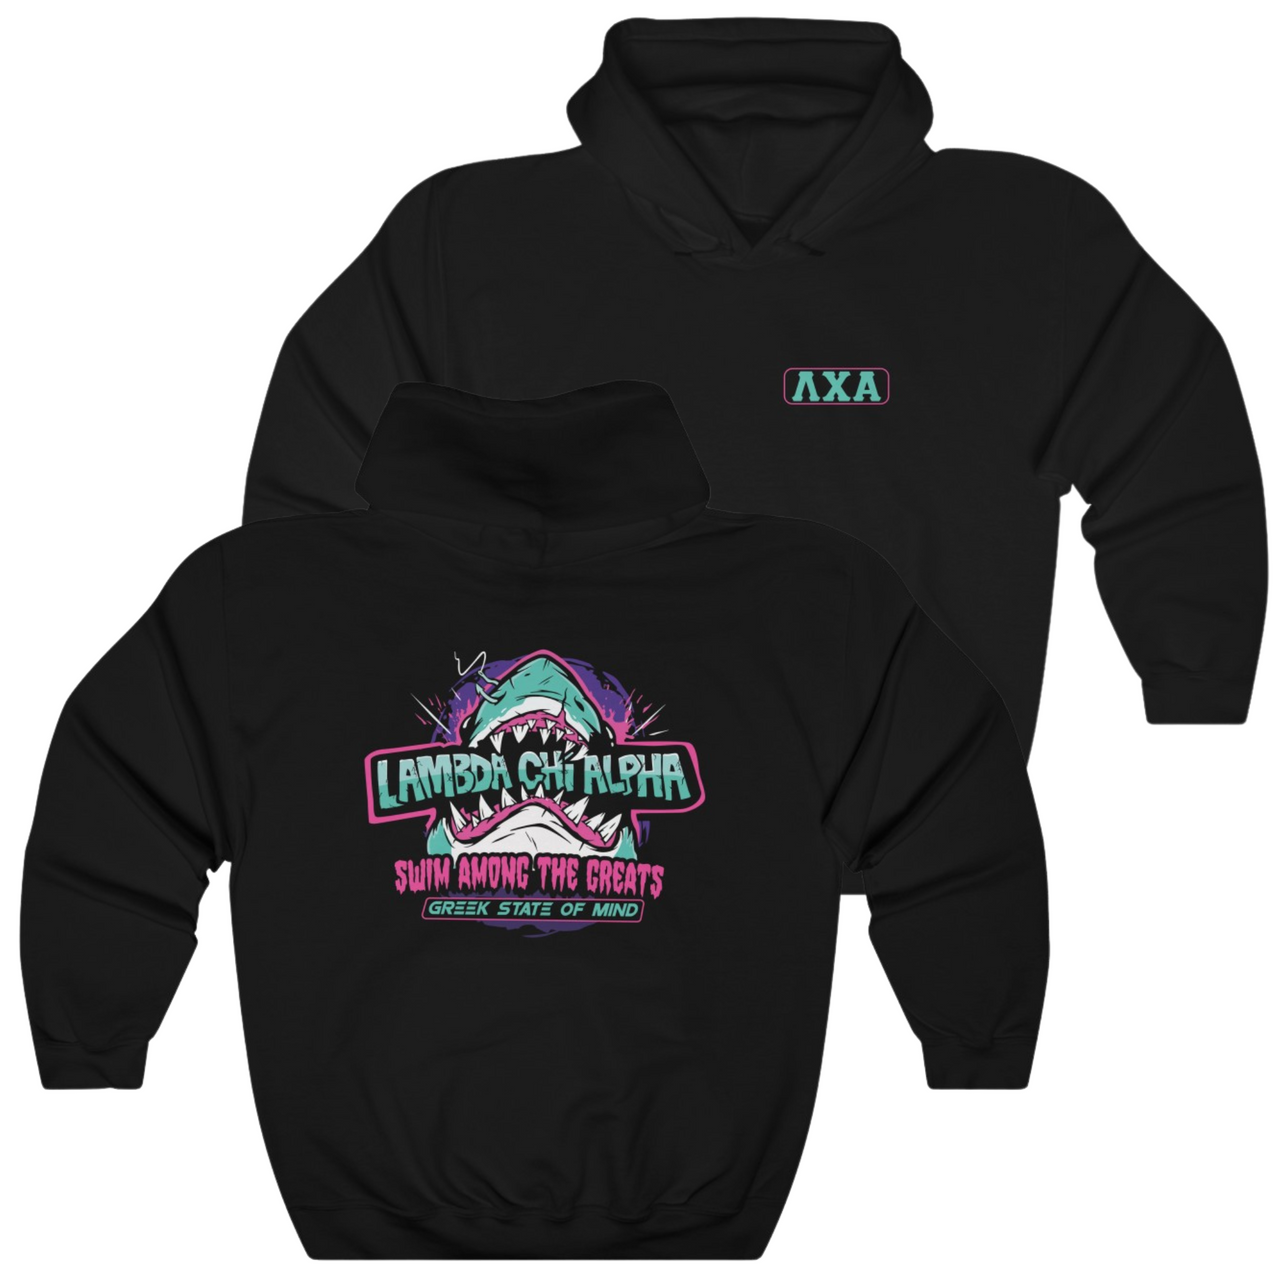 Black Lambda Chi Alpha Graphic Hoodie | The Deep End | Lambda Chi Alpha Fraternity Shirt 